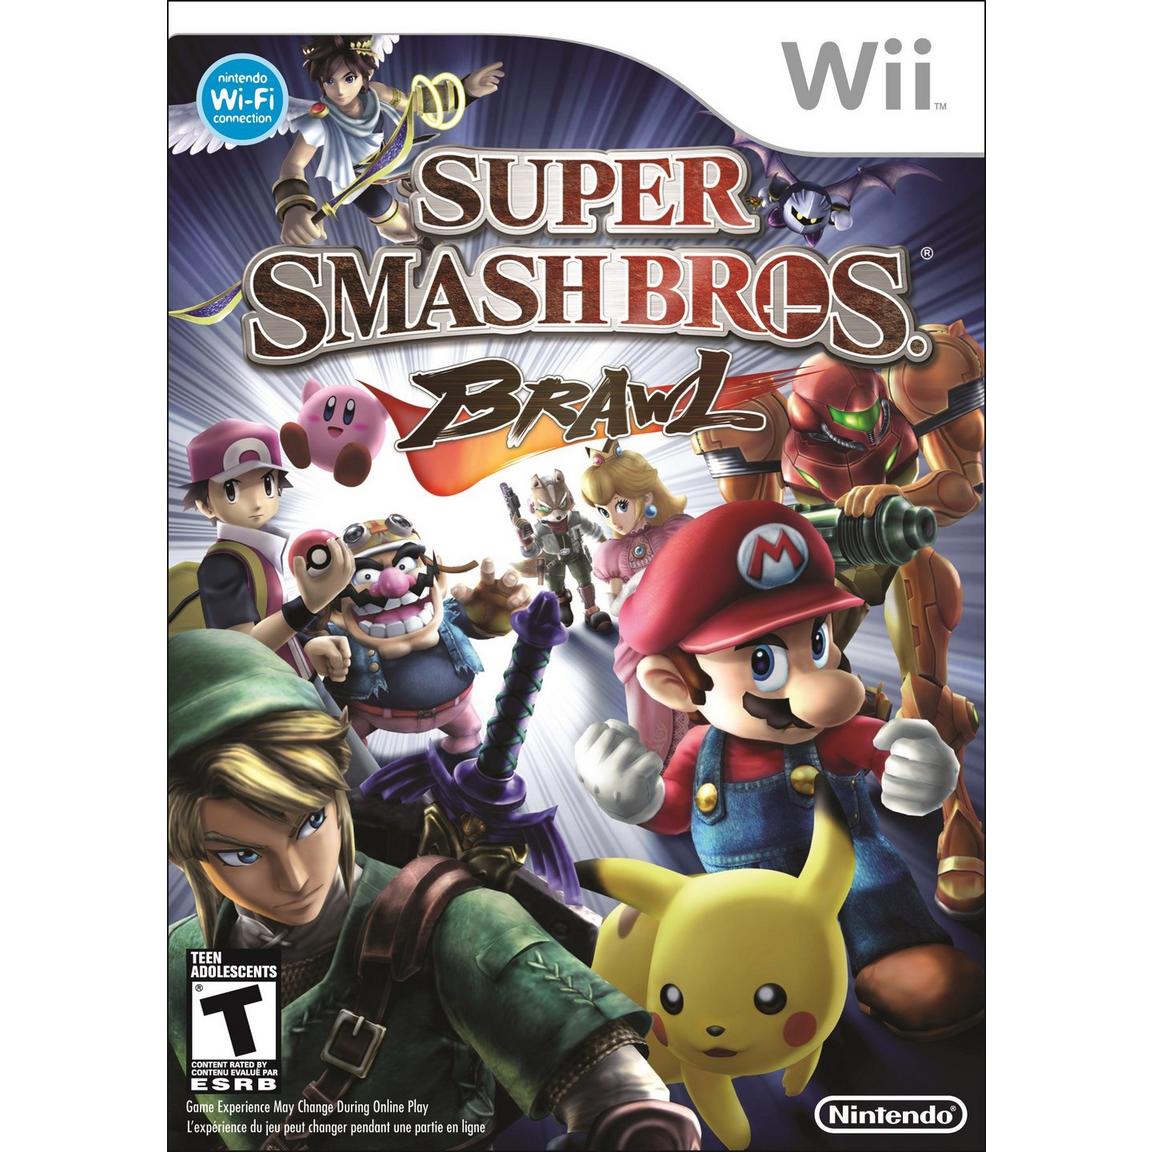 Super Smash Bros Brawl - Nintendo Wii, Pre-Owned